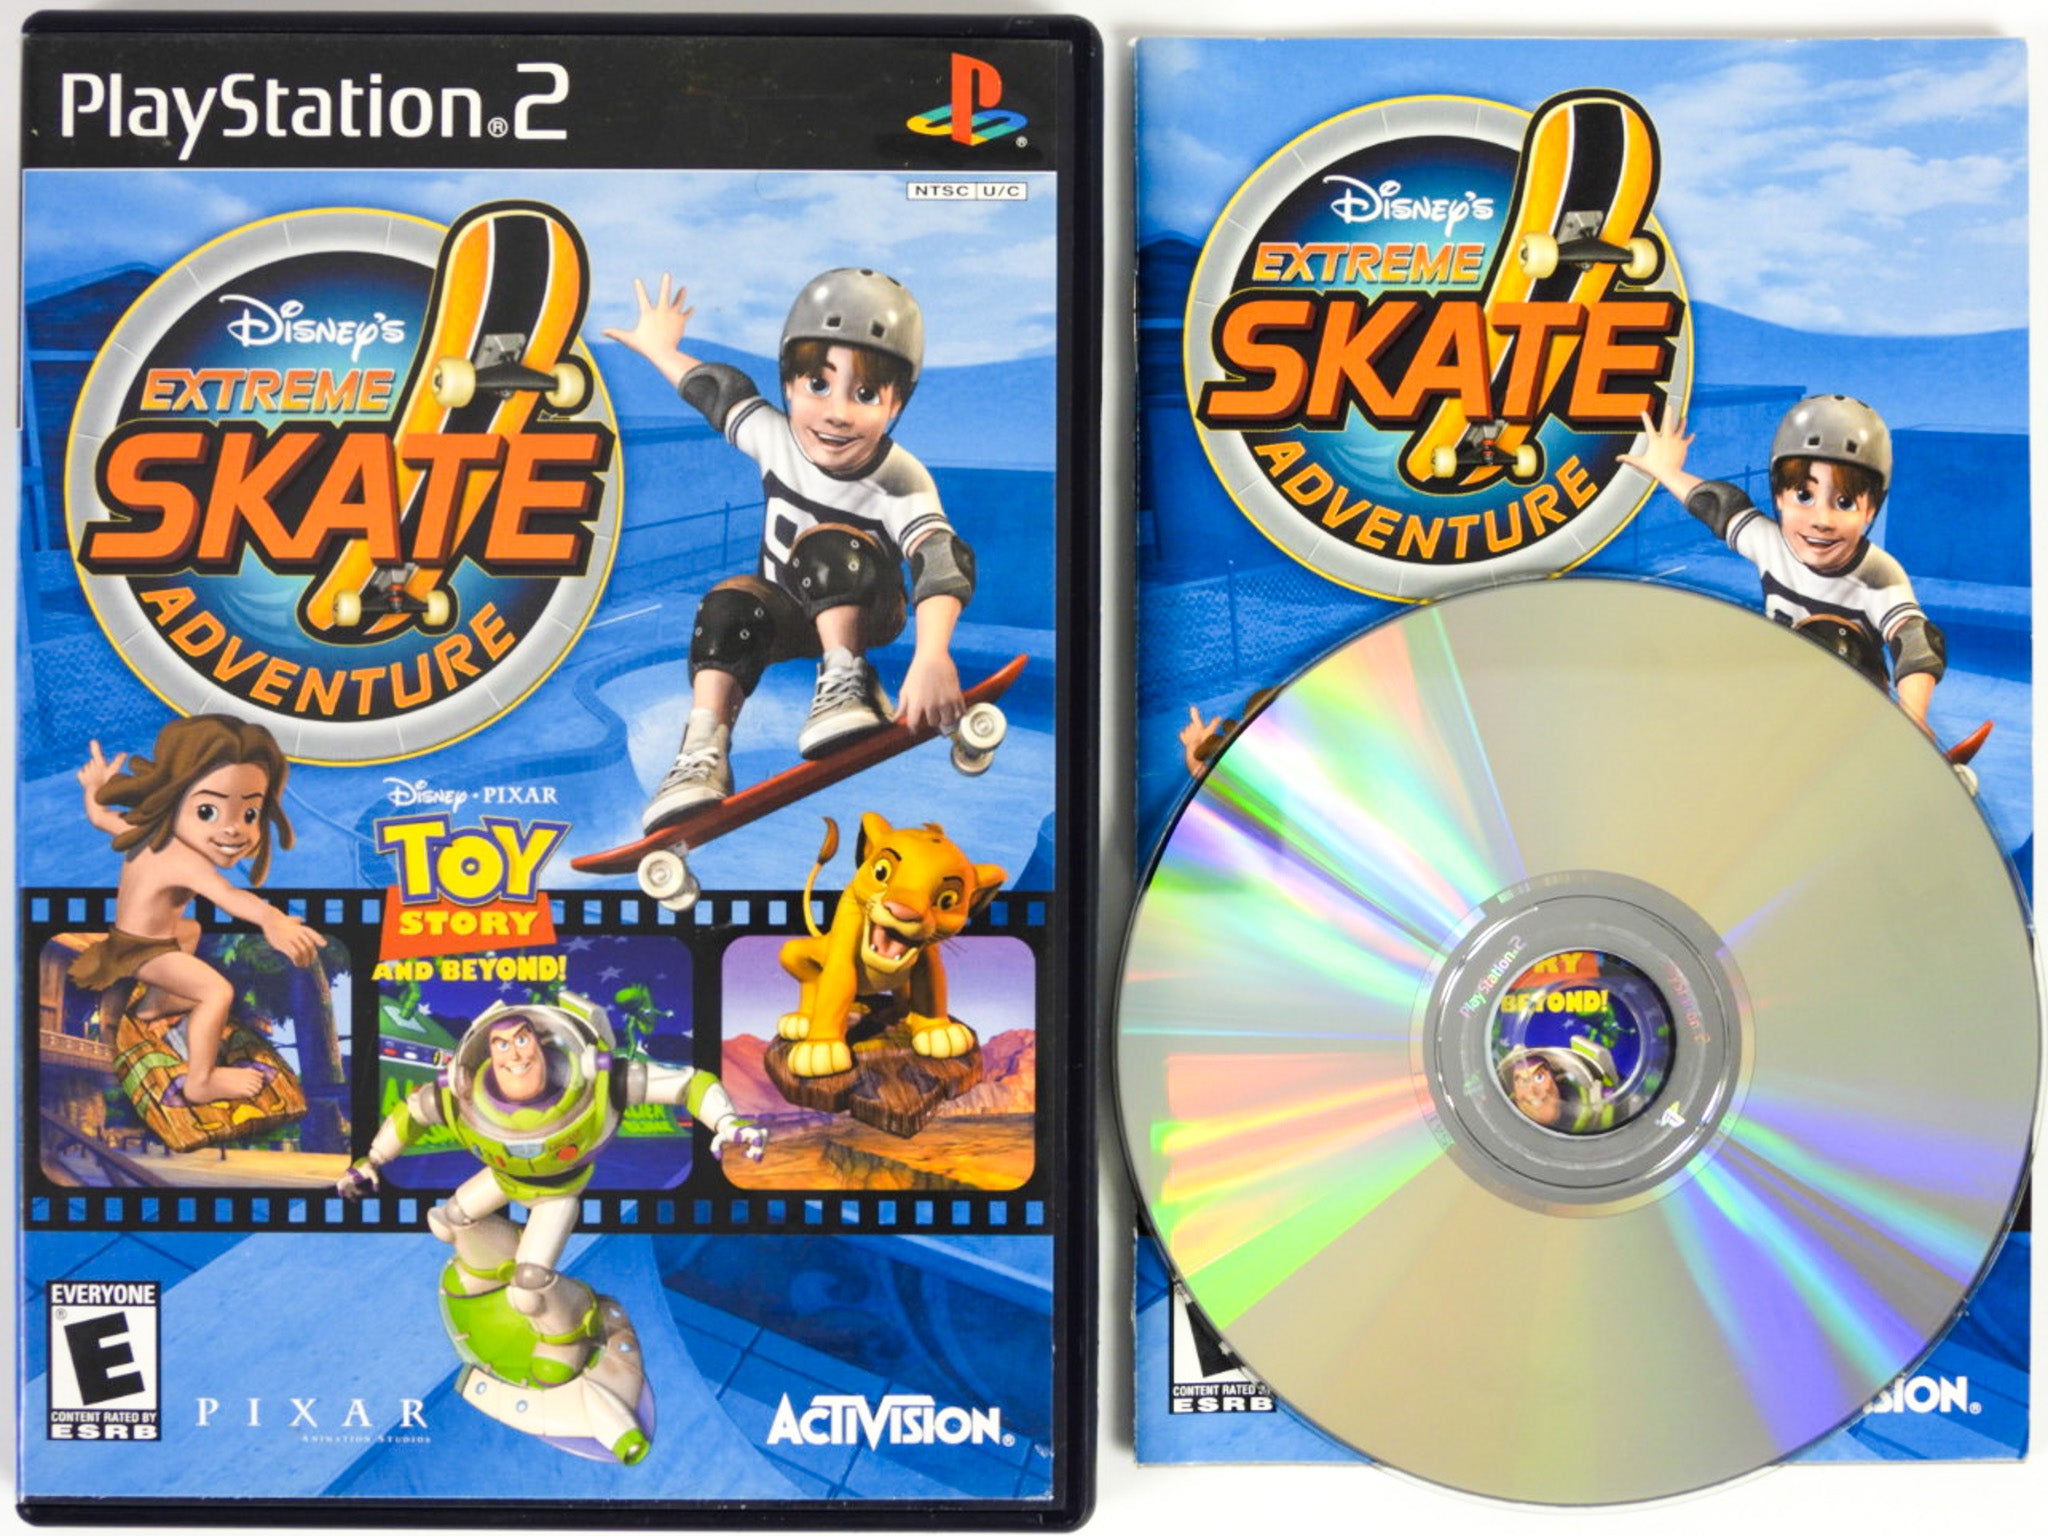 Disney's Extreme Skate Adventure PS2 (Seminovo) - Play n' Play